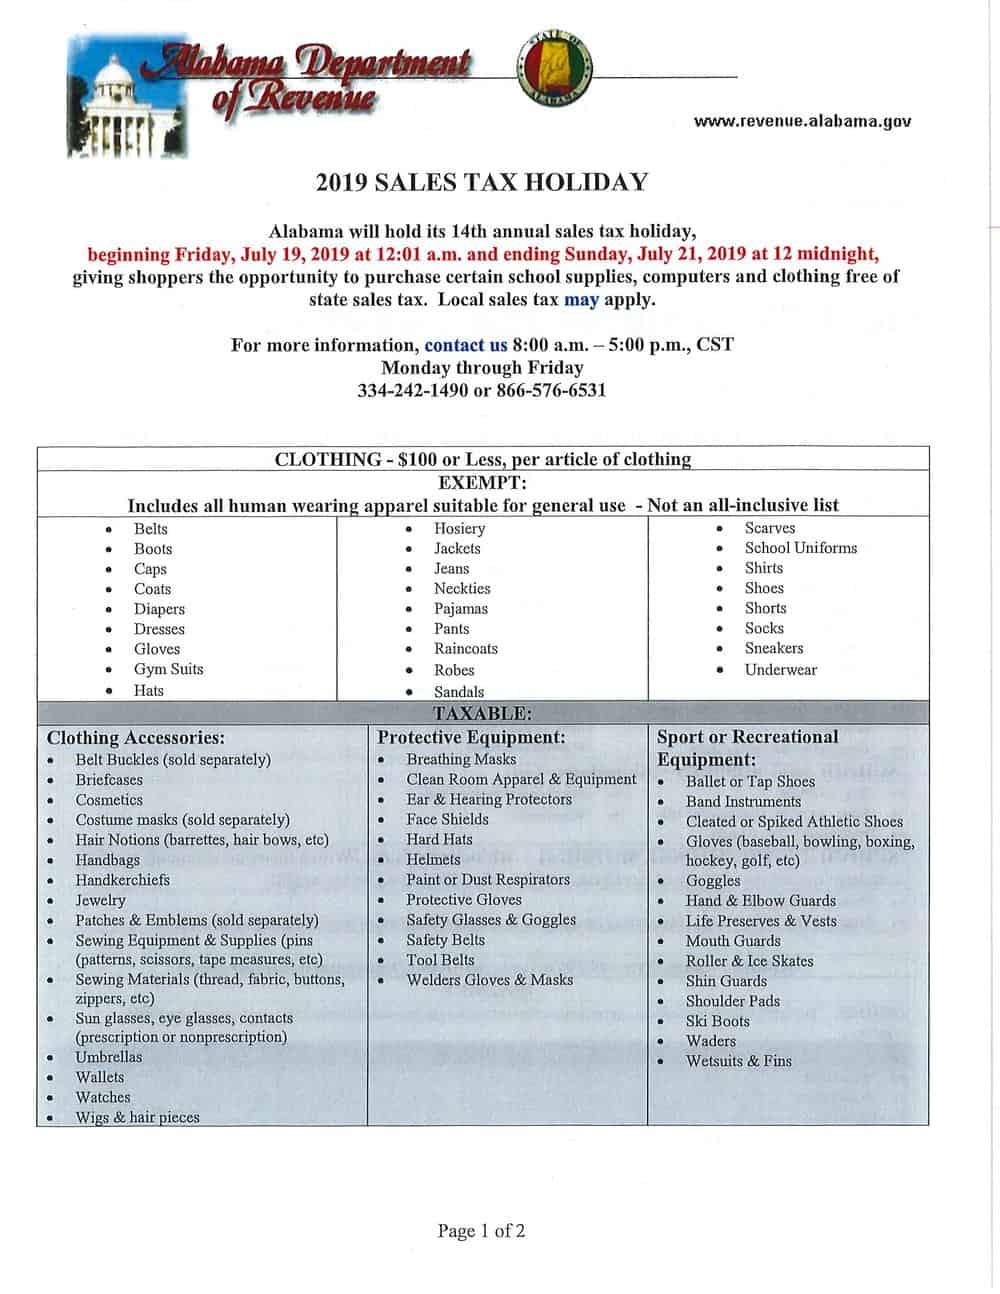 AL Sales Tax Holiday_Page_2.jpg